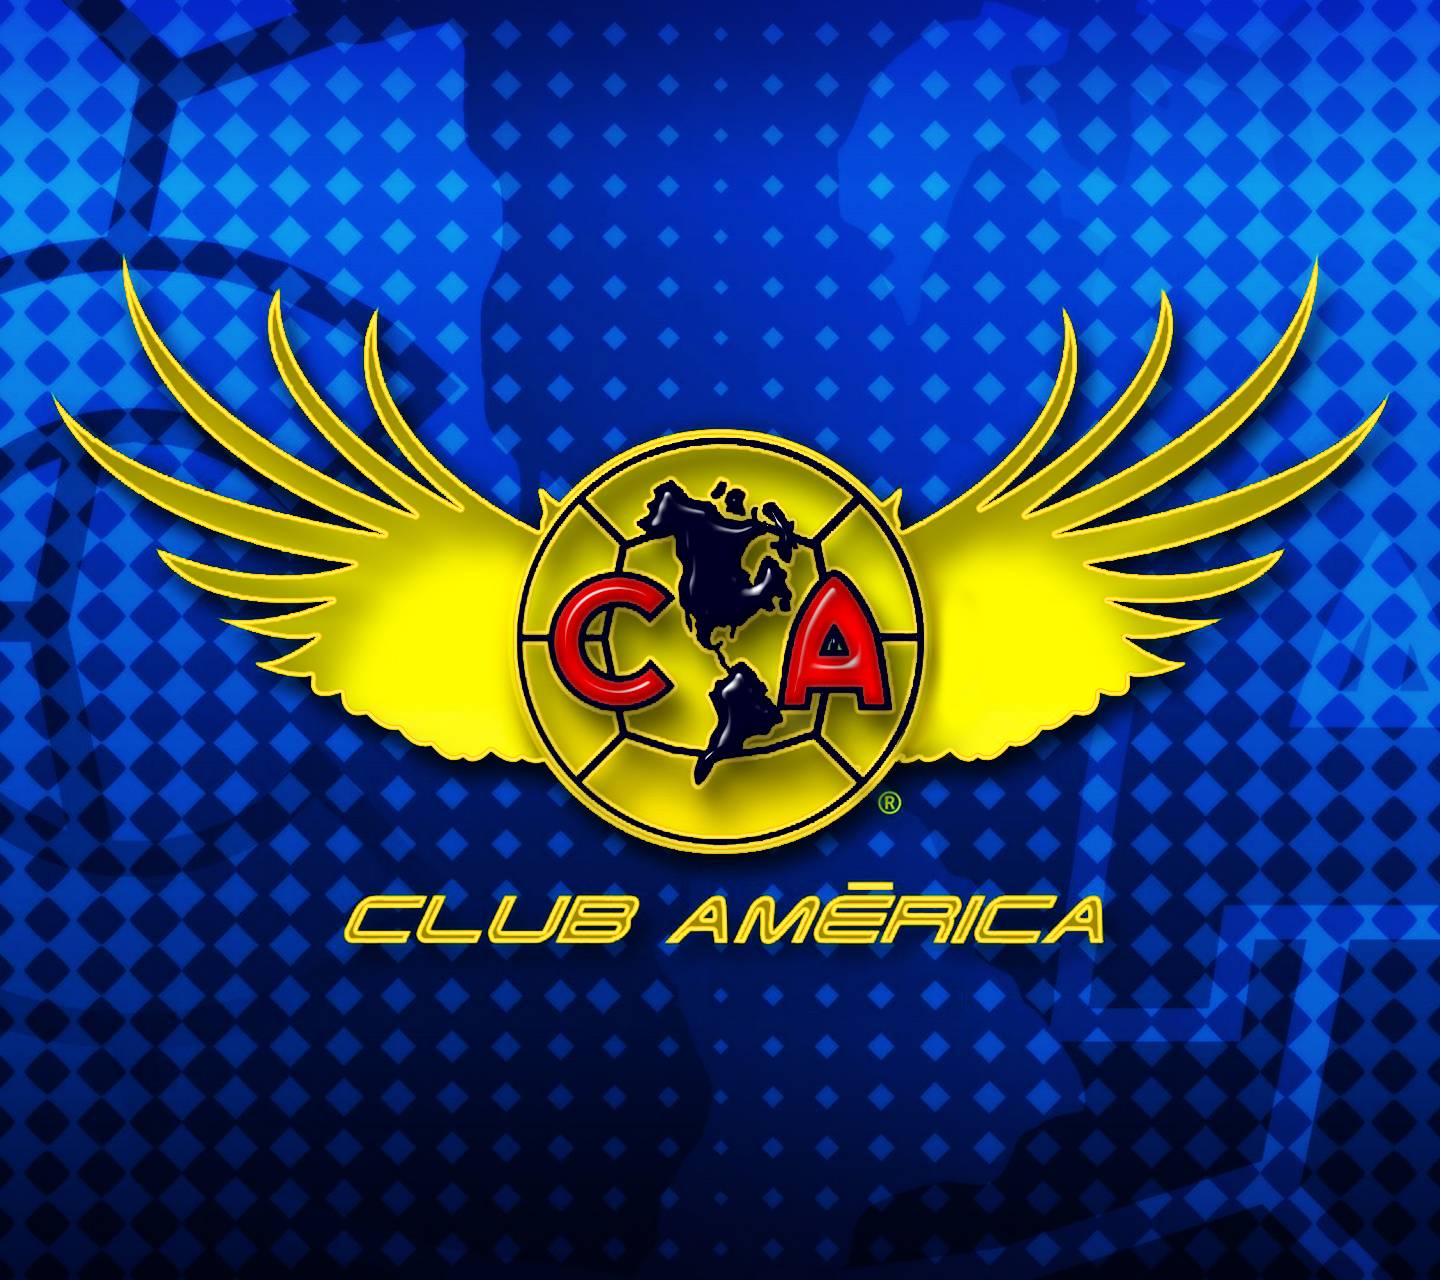 Club América Logo Wallpapers 4k Hd Club América Logo Backgrounds On Wallpaperbat 3700